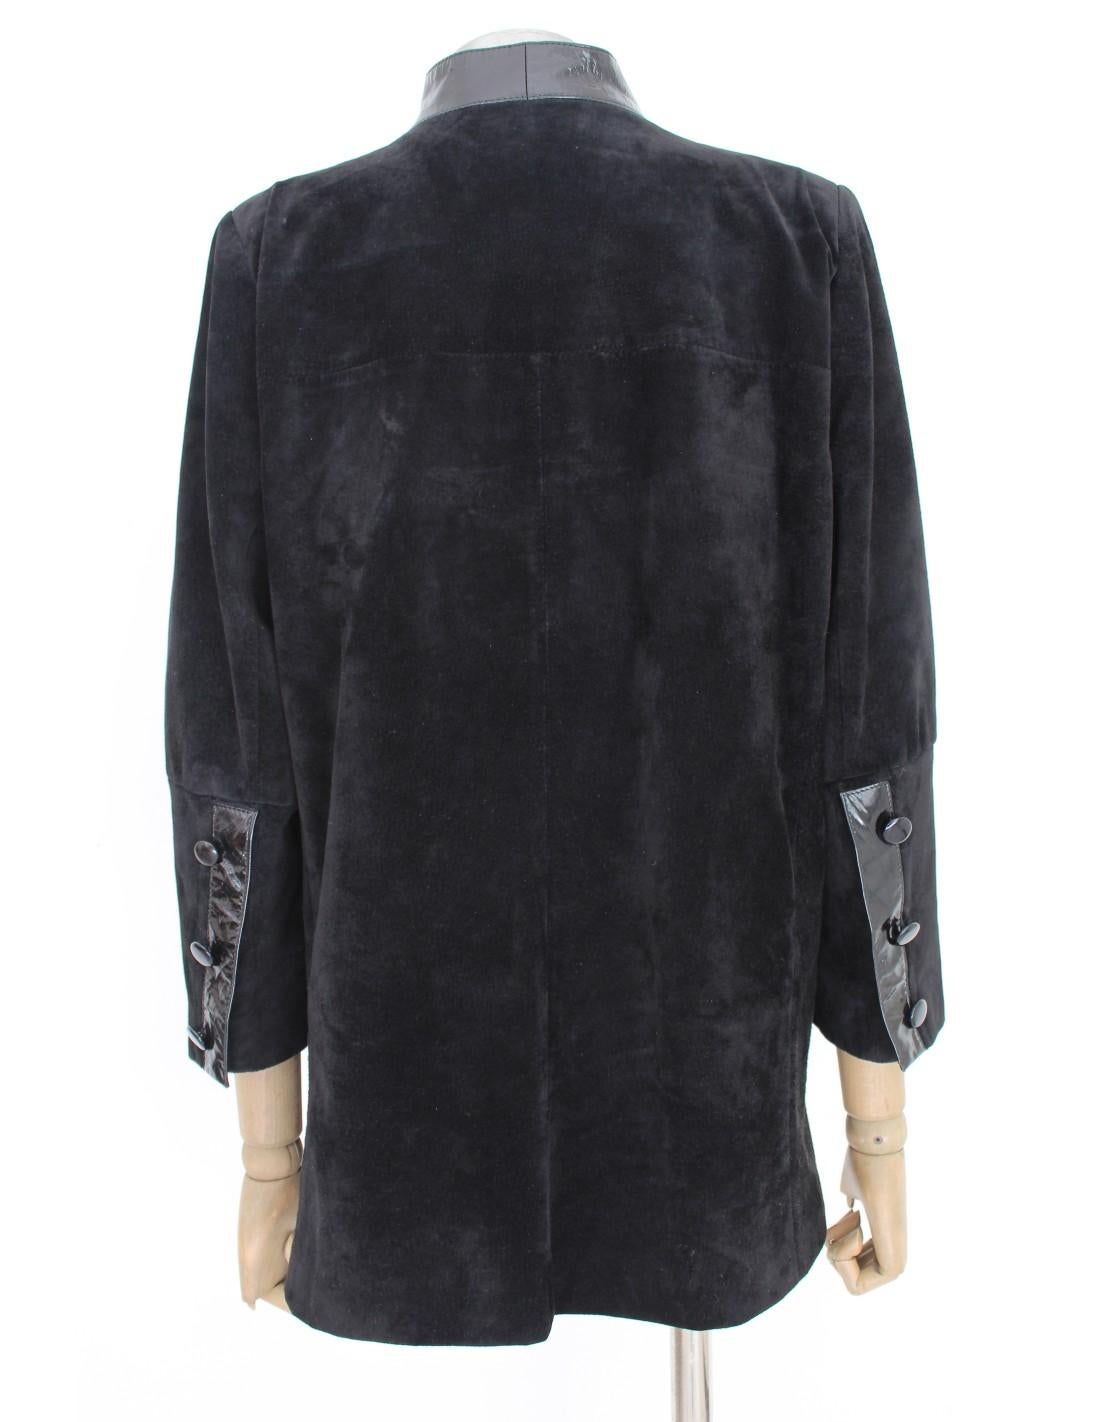 Christian Dior Boutique Black Suede Skirt Suit 1980s 1